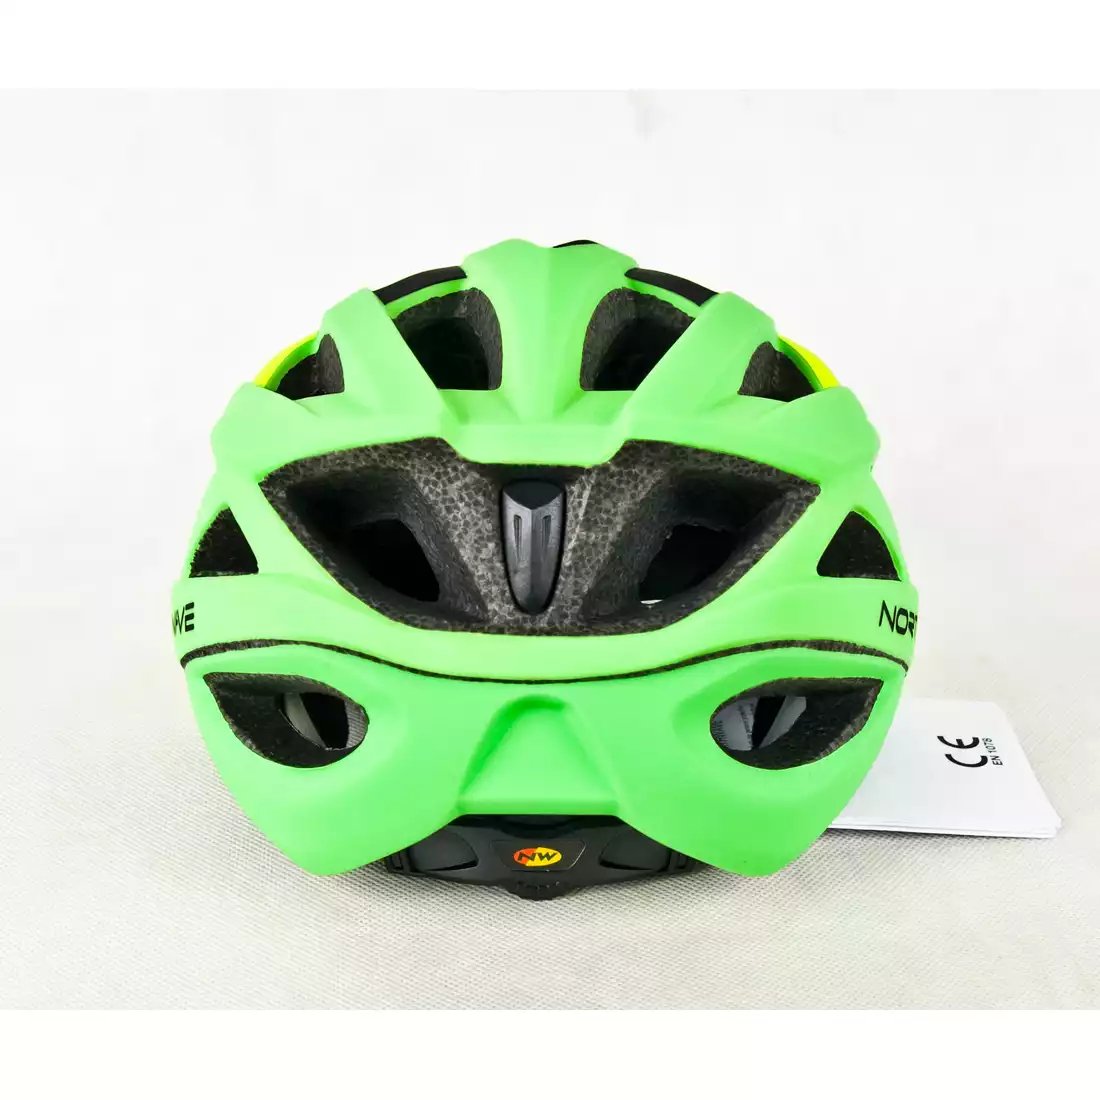 NORTHWAVE RANGER kask rowerowy, zielony